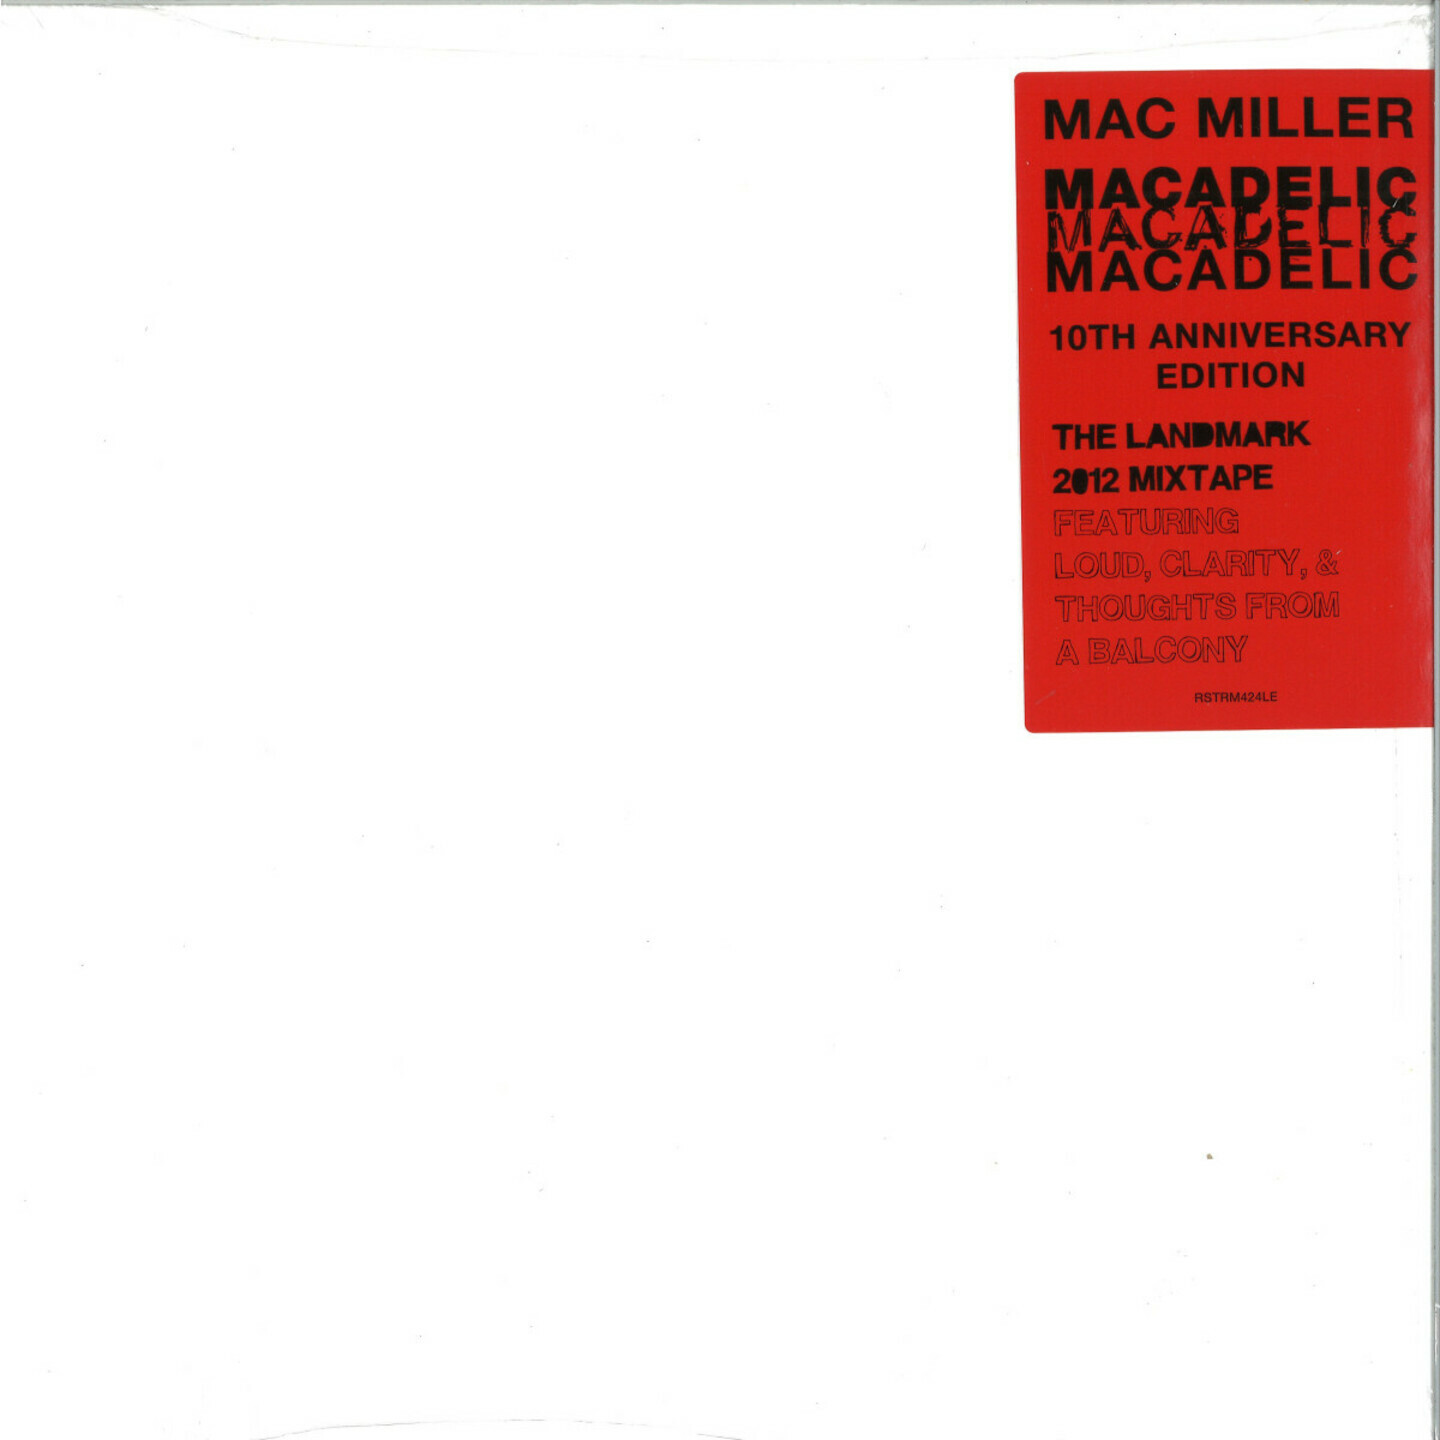 MAC MILLER - Macadelic 2xLP 10th Anniversary Edition